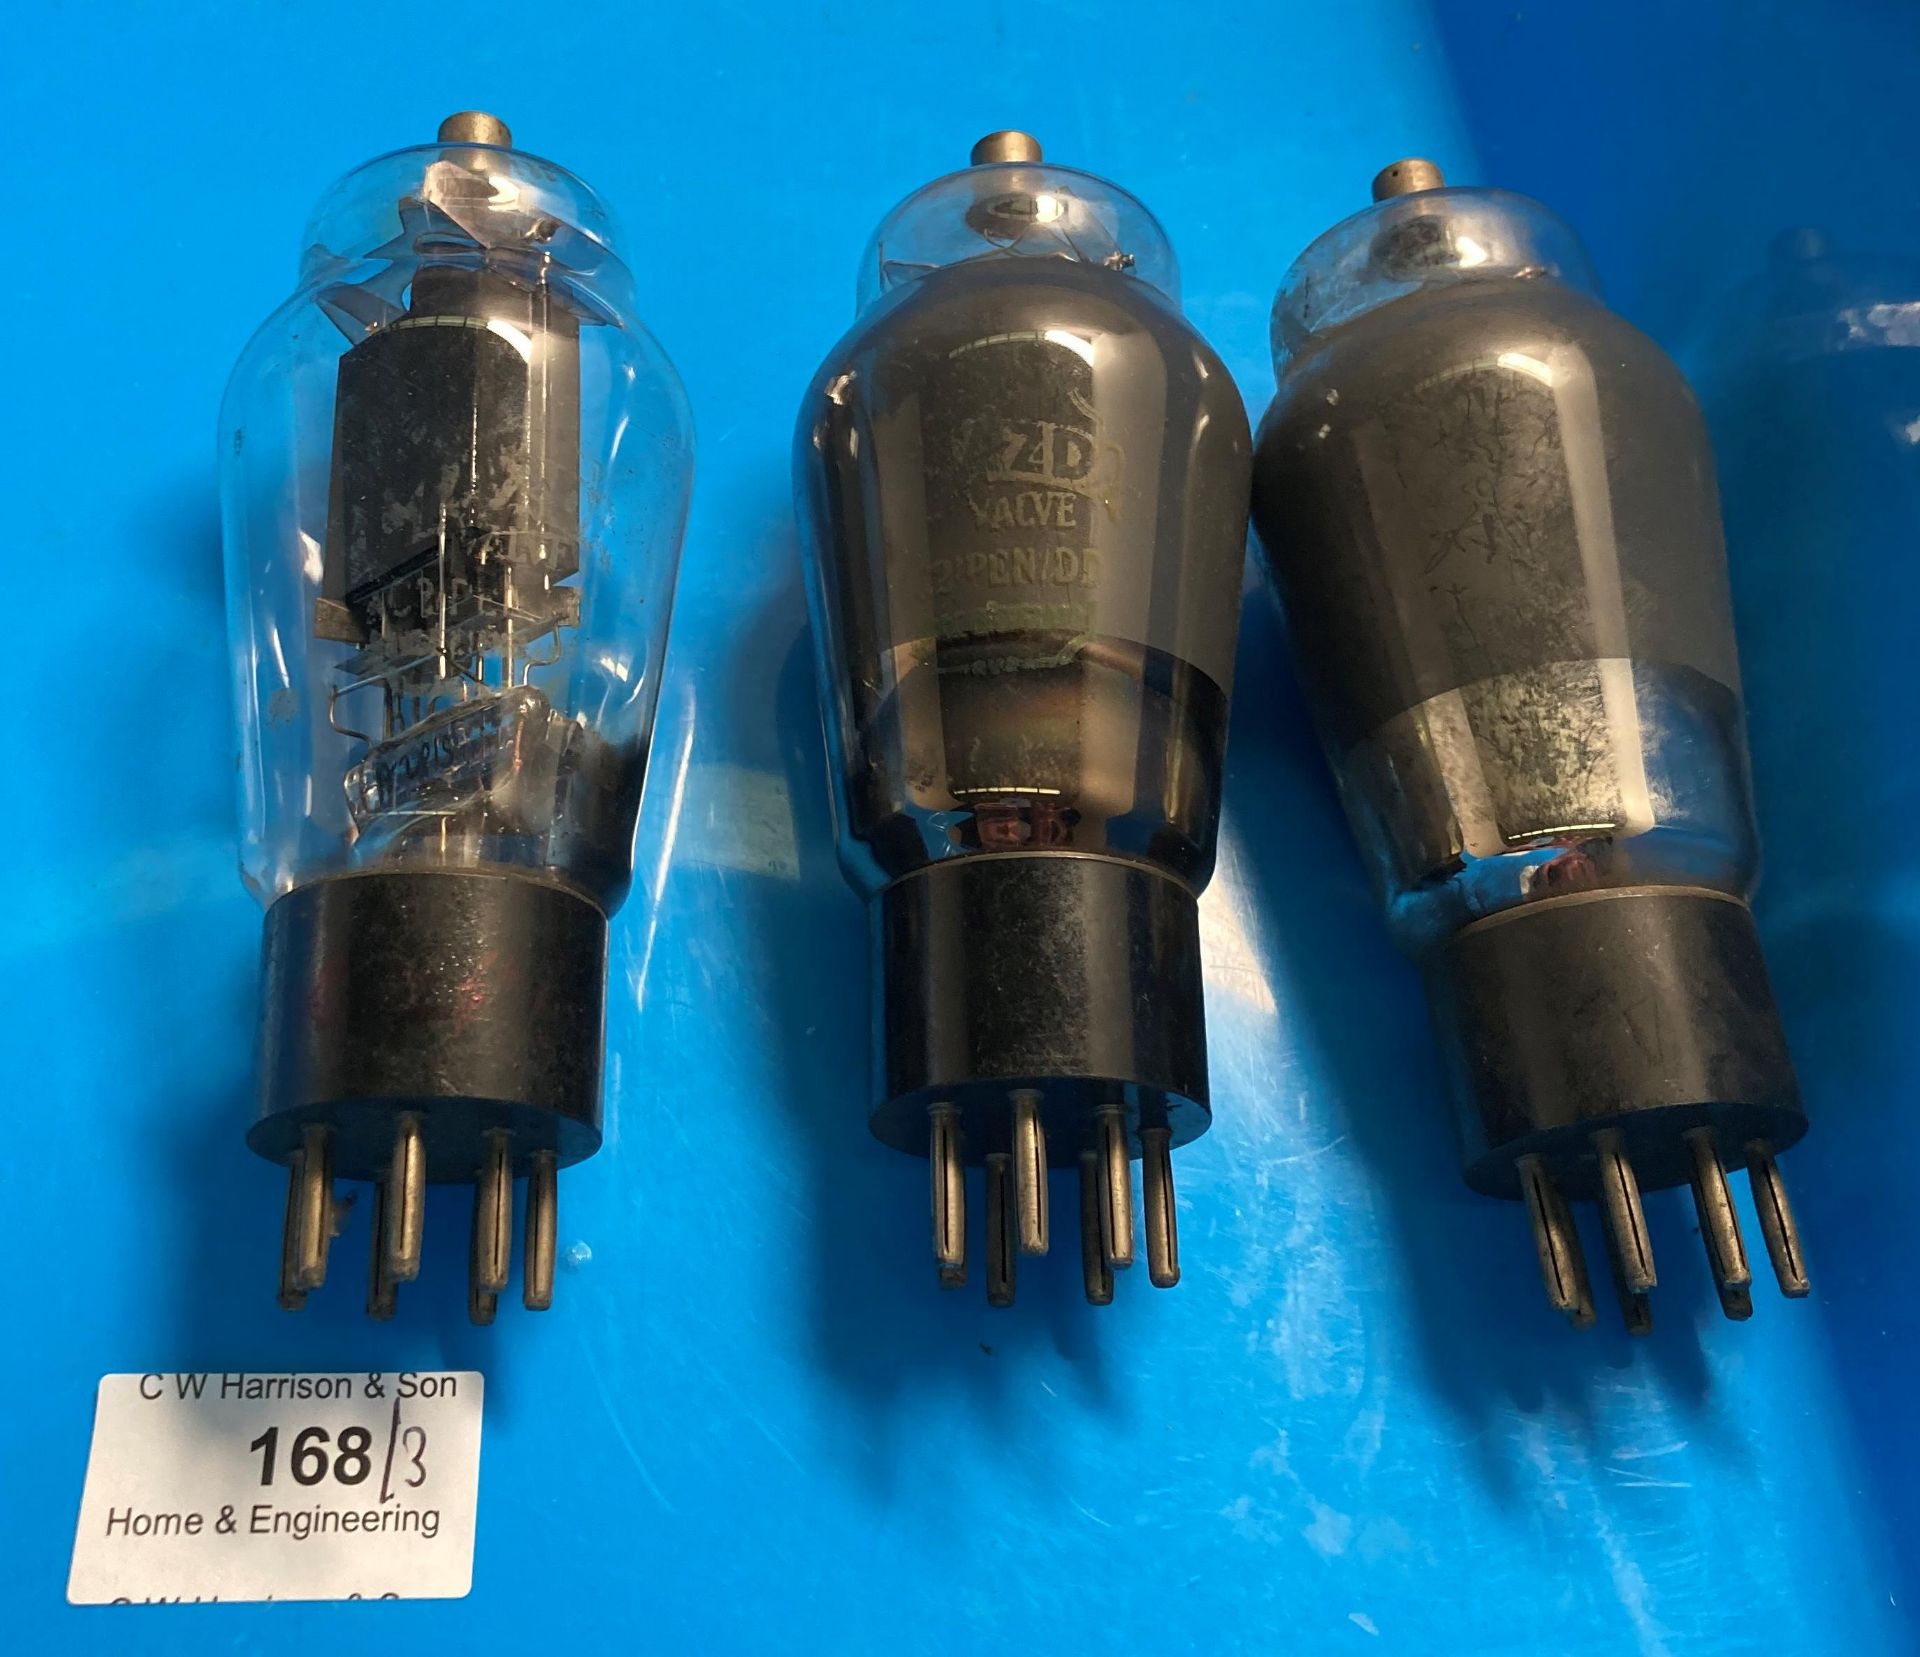 Three Mazda AC2/PEN/DD radio valves (Saleroom location: S3 Counter)